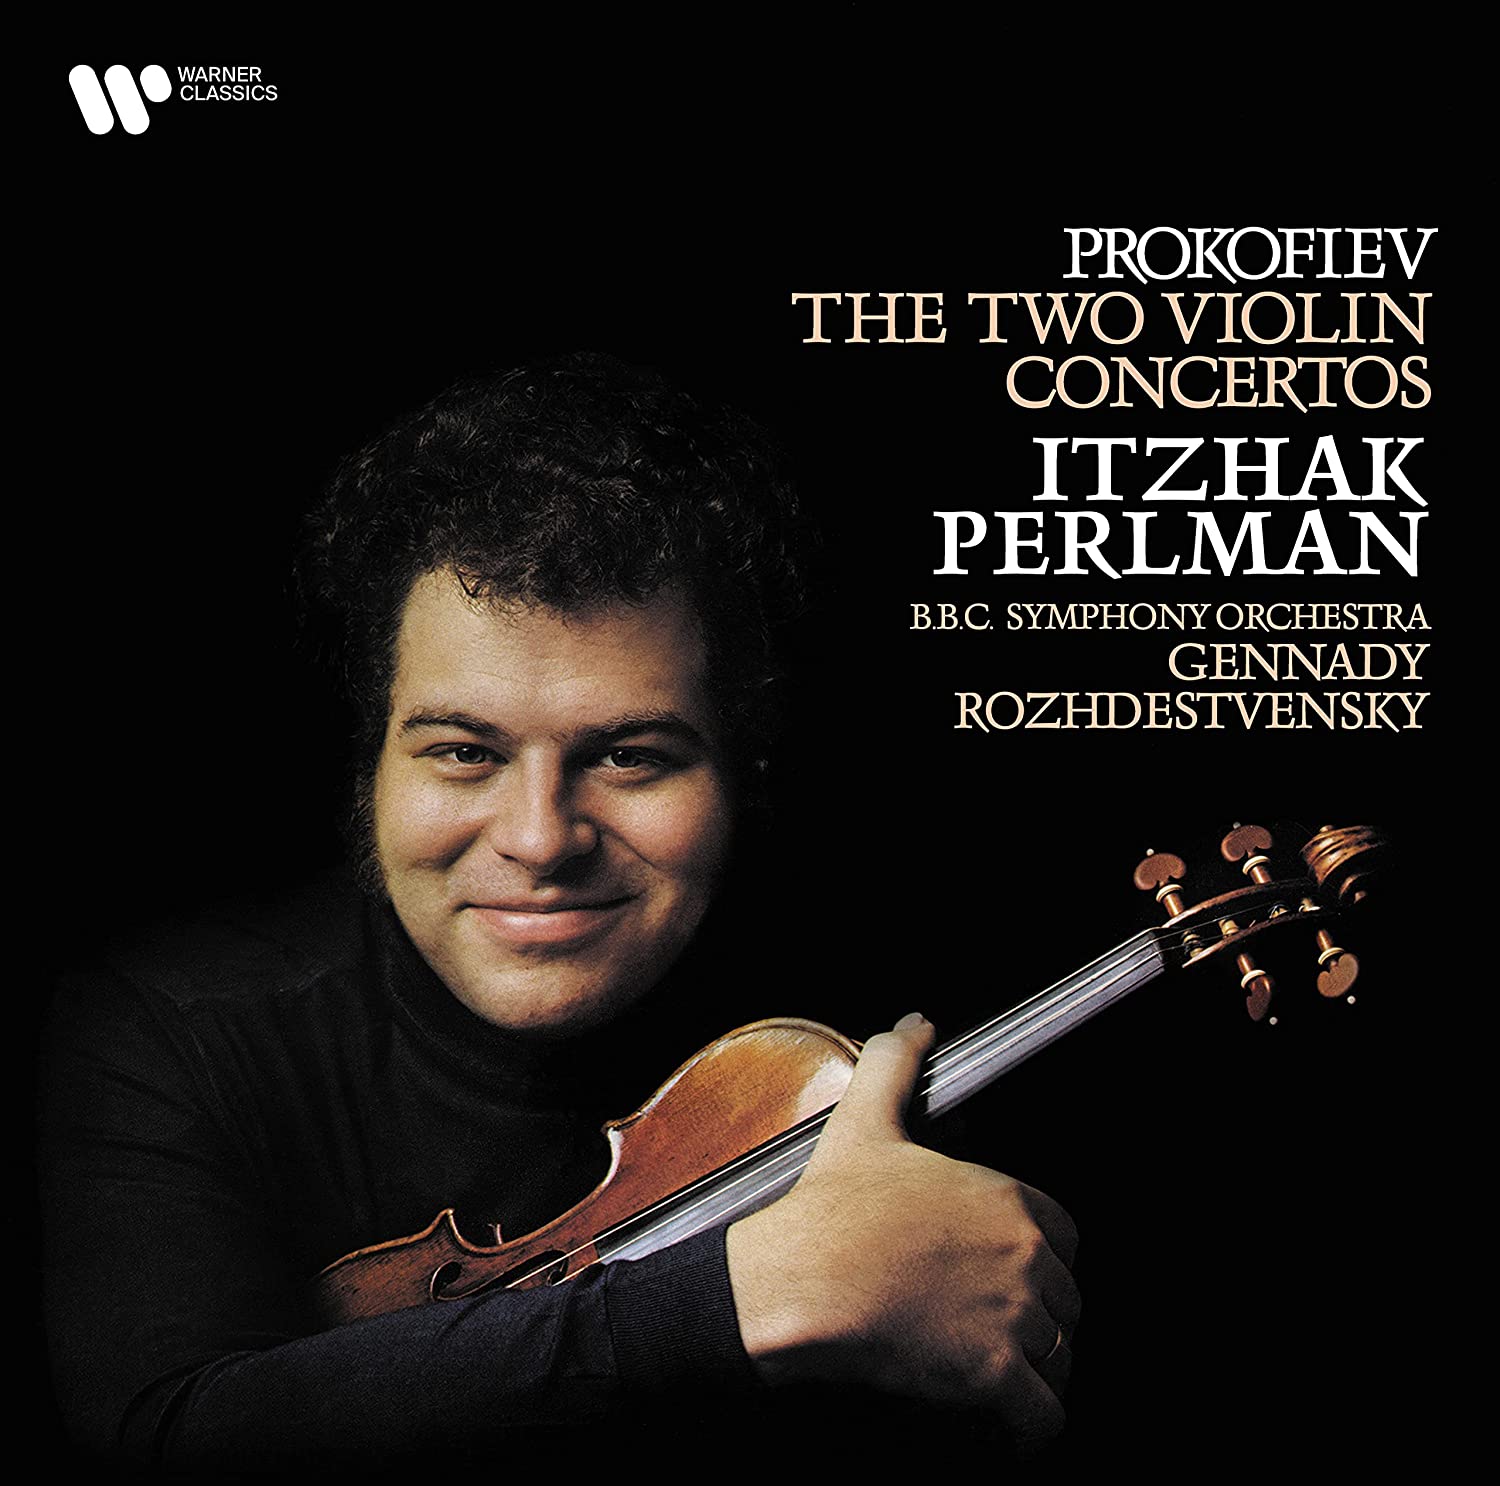 Классика WM Itzhak Perlman, BBC Symphony Orchestra, Gennadi Rozhdestvensky - Prokofiev The Two Violin Concertos (Black Vinyl LP) johannes brahms violin sonatas 1 3 alexis weissenberg